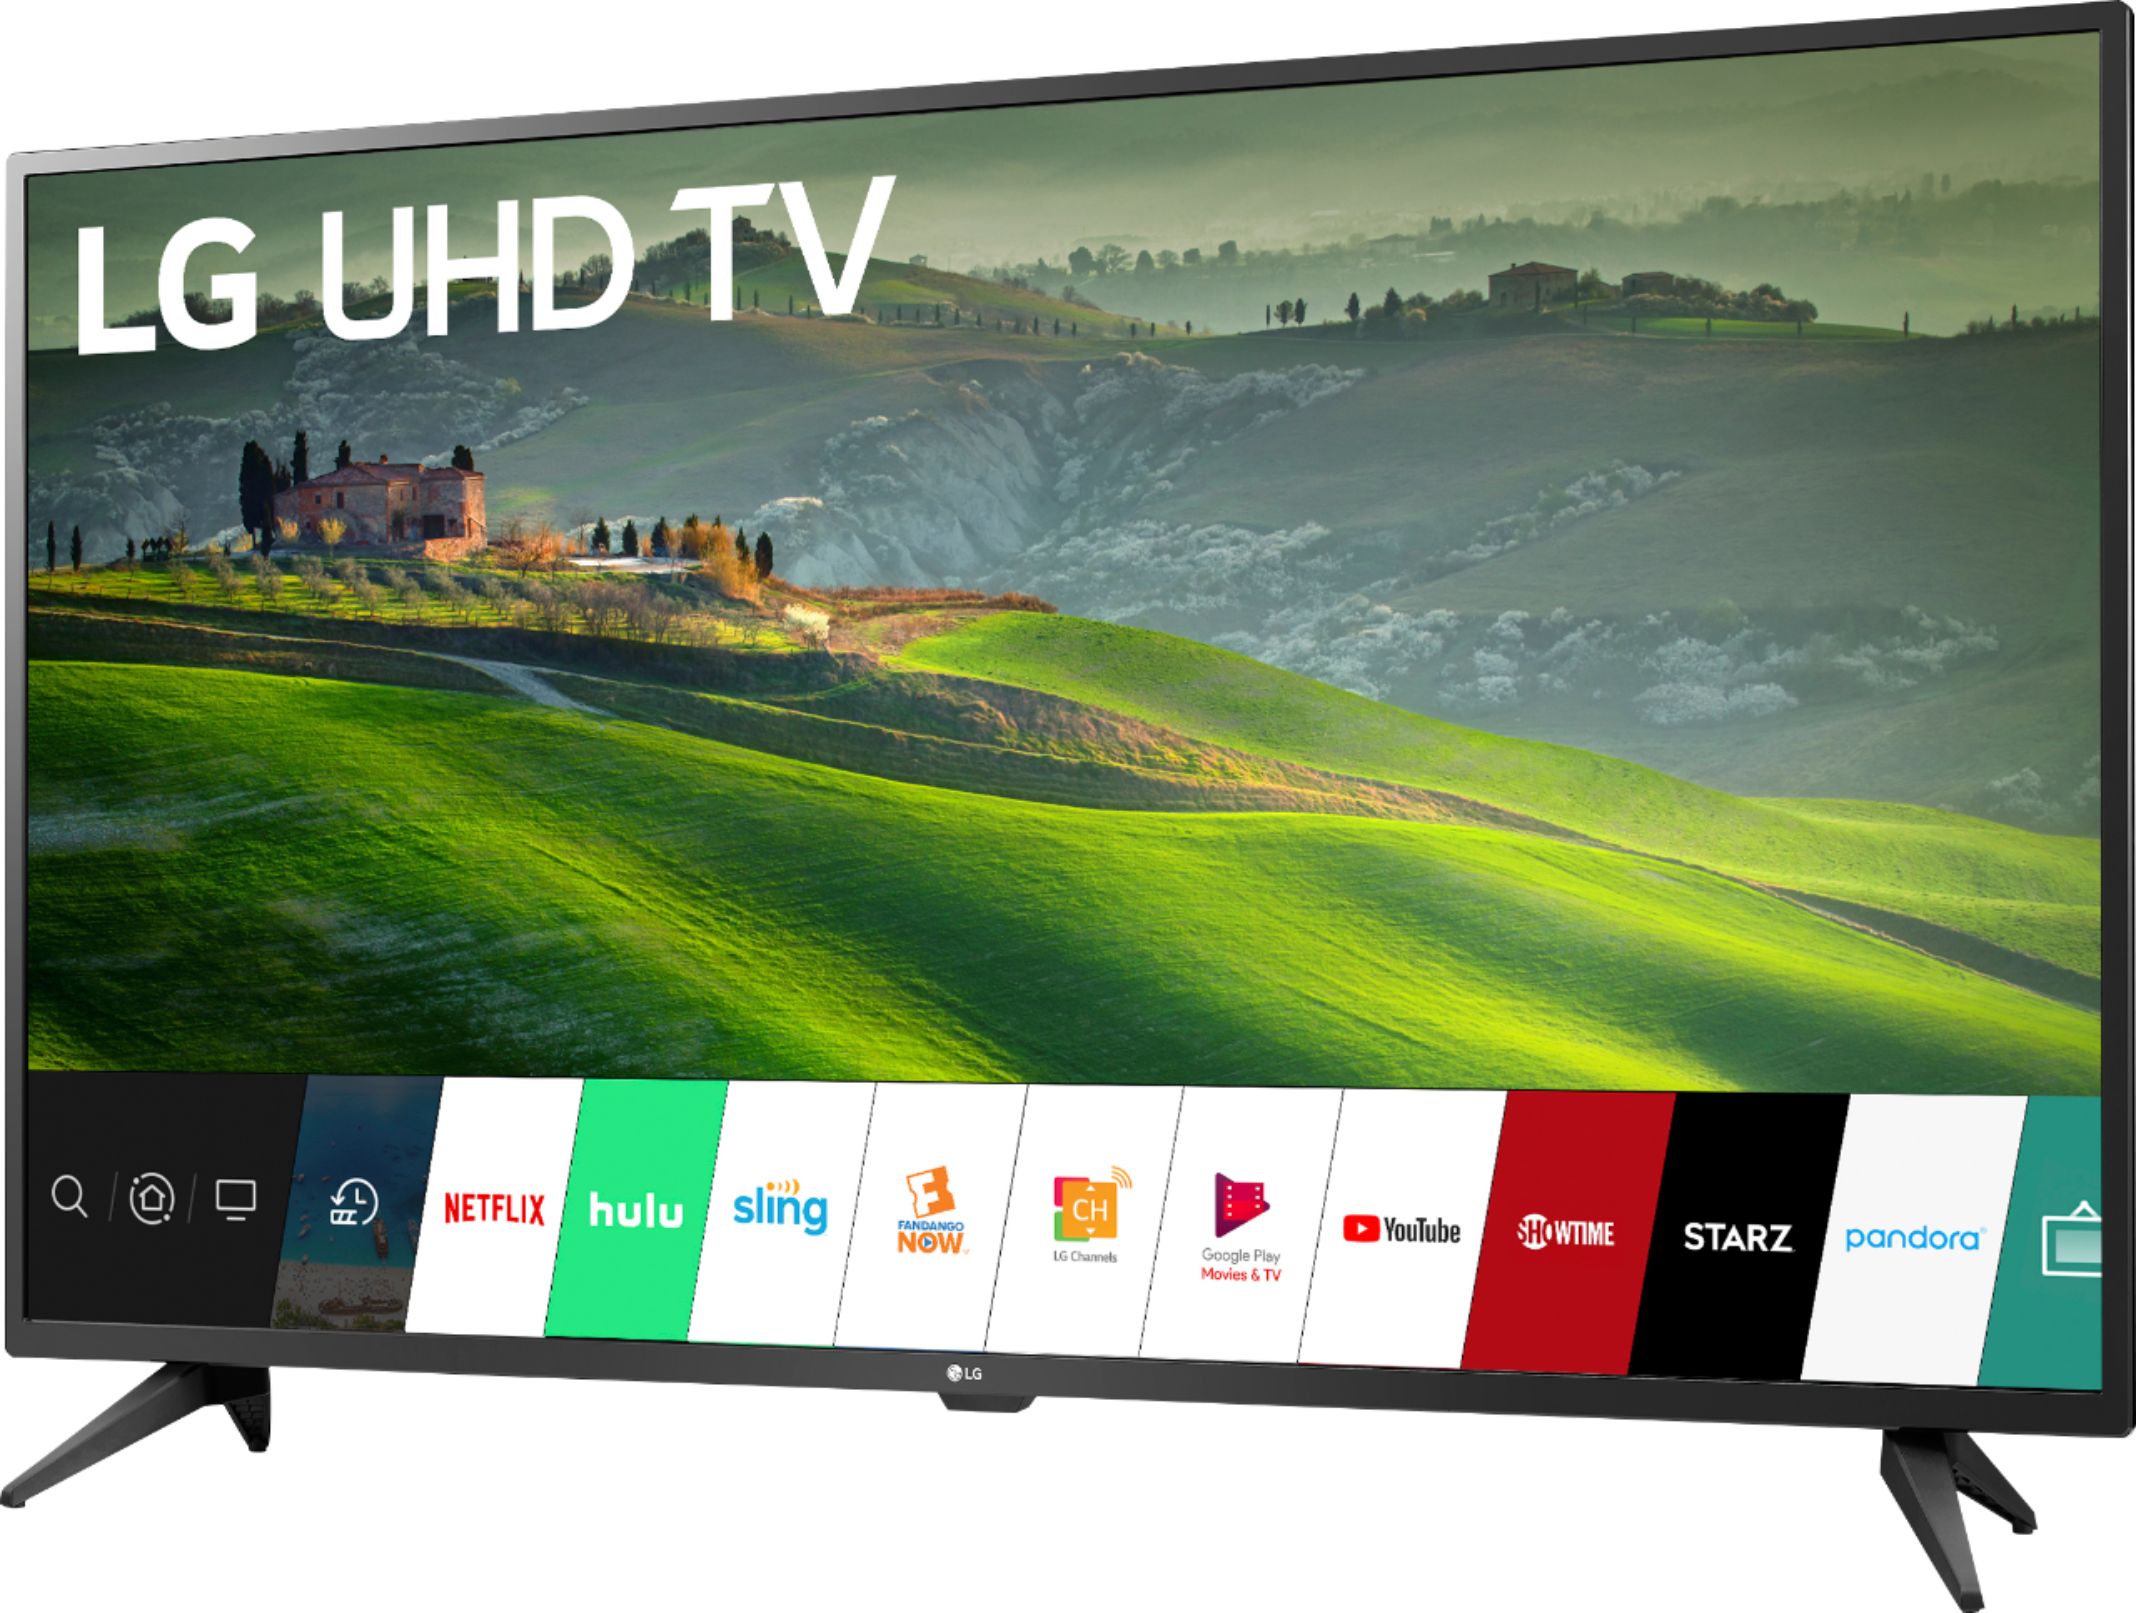 Lg 50 Class Led Um6900pua Series 2160p Smart 4k Uhd Tv With Hdr 50um6900pua Best Buy